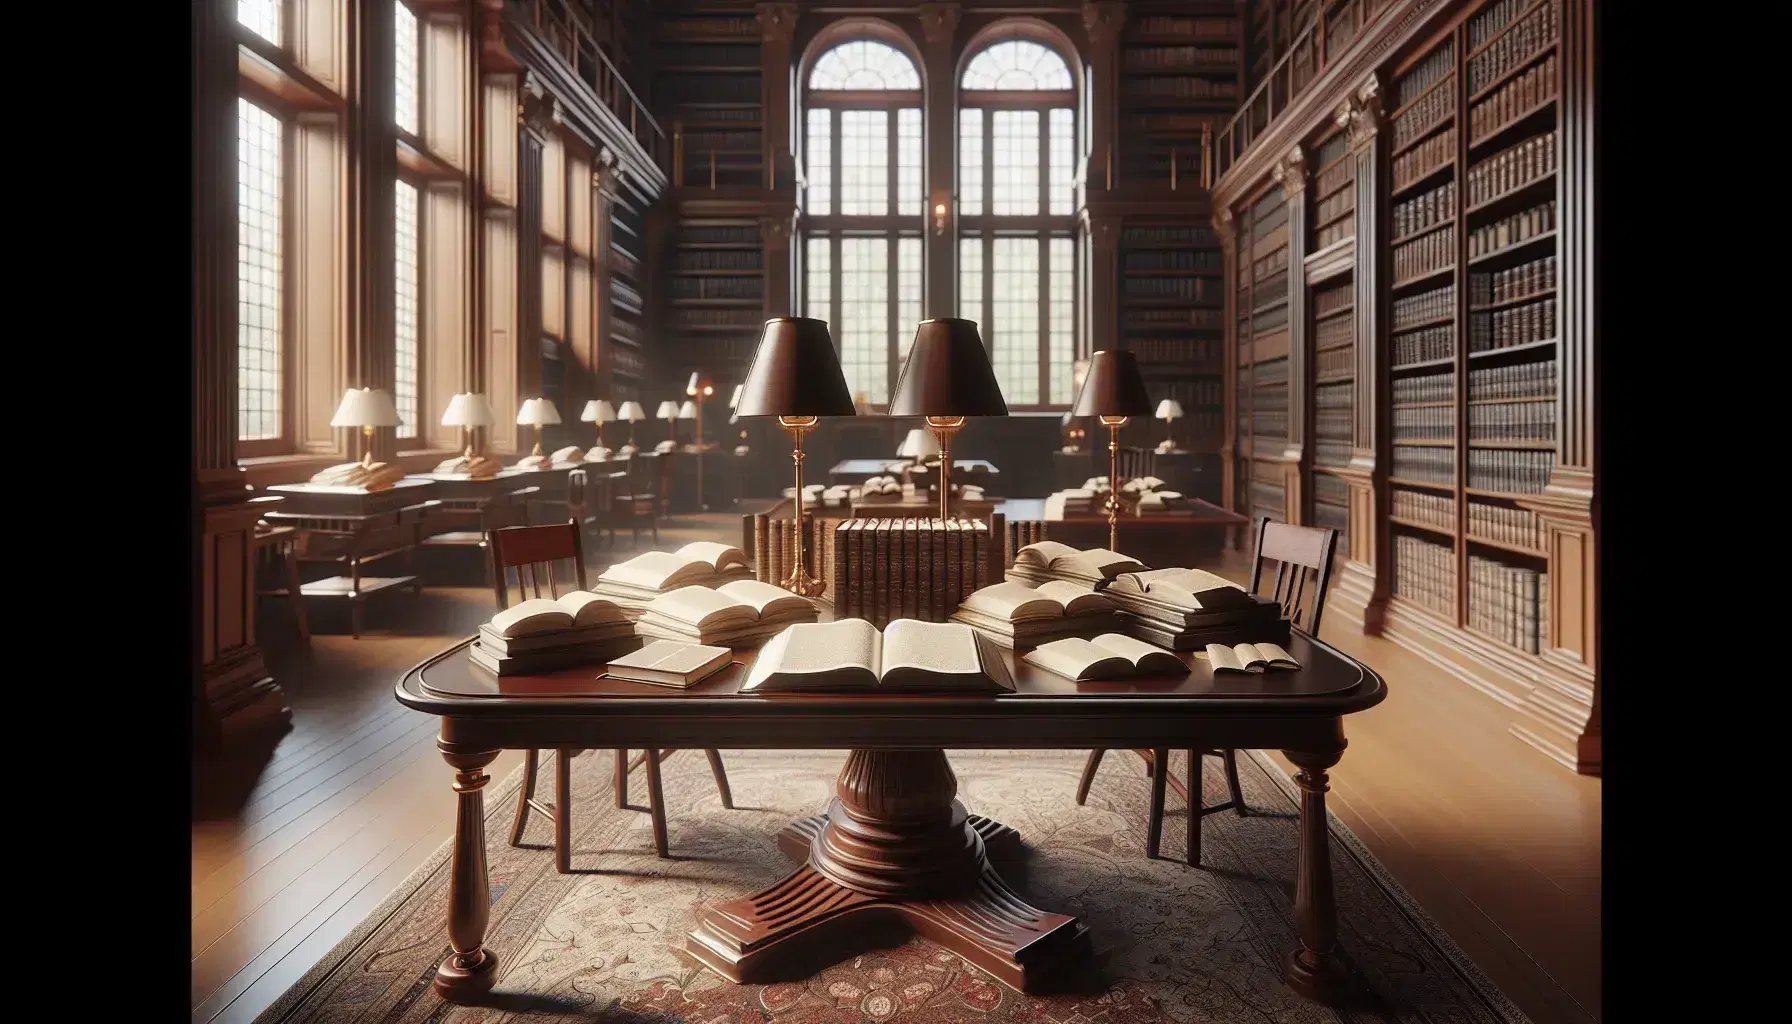 Biblioteca clásica con mesa de madera oscura, libros abiertos, lámparas de lectura, estanterías llenas de libros y ventana grande que aporta luz natural.